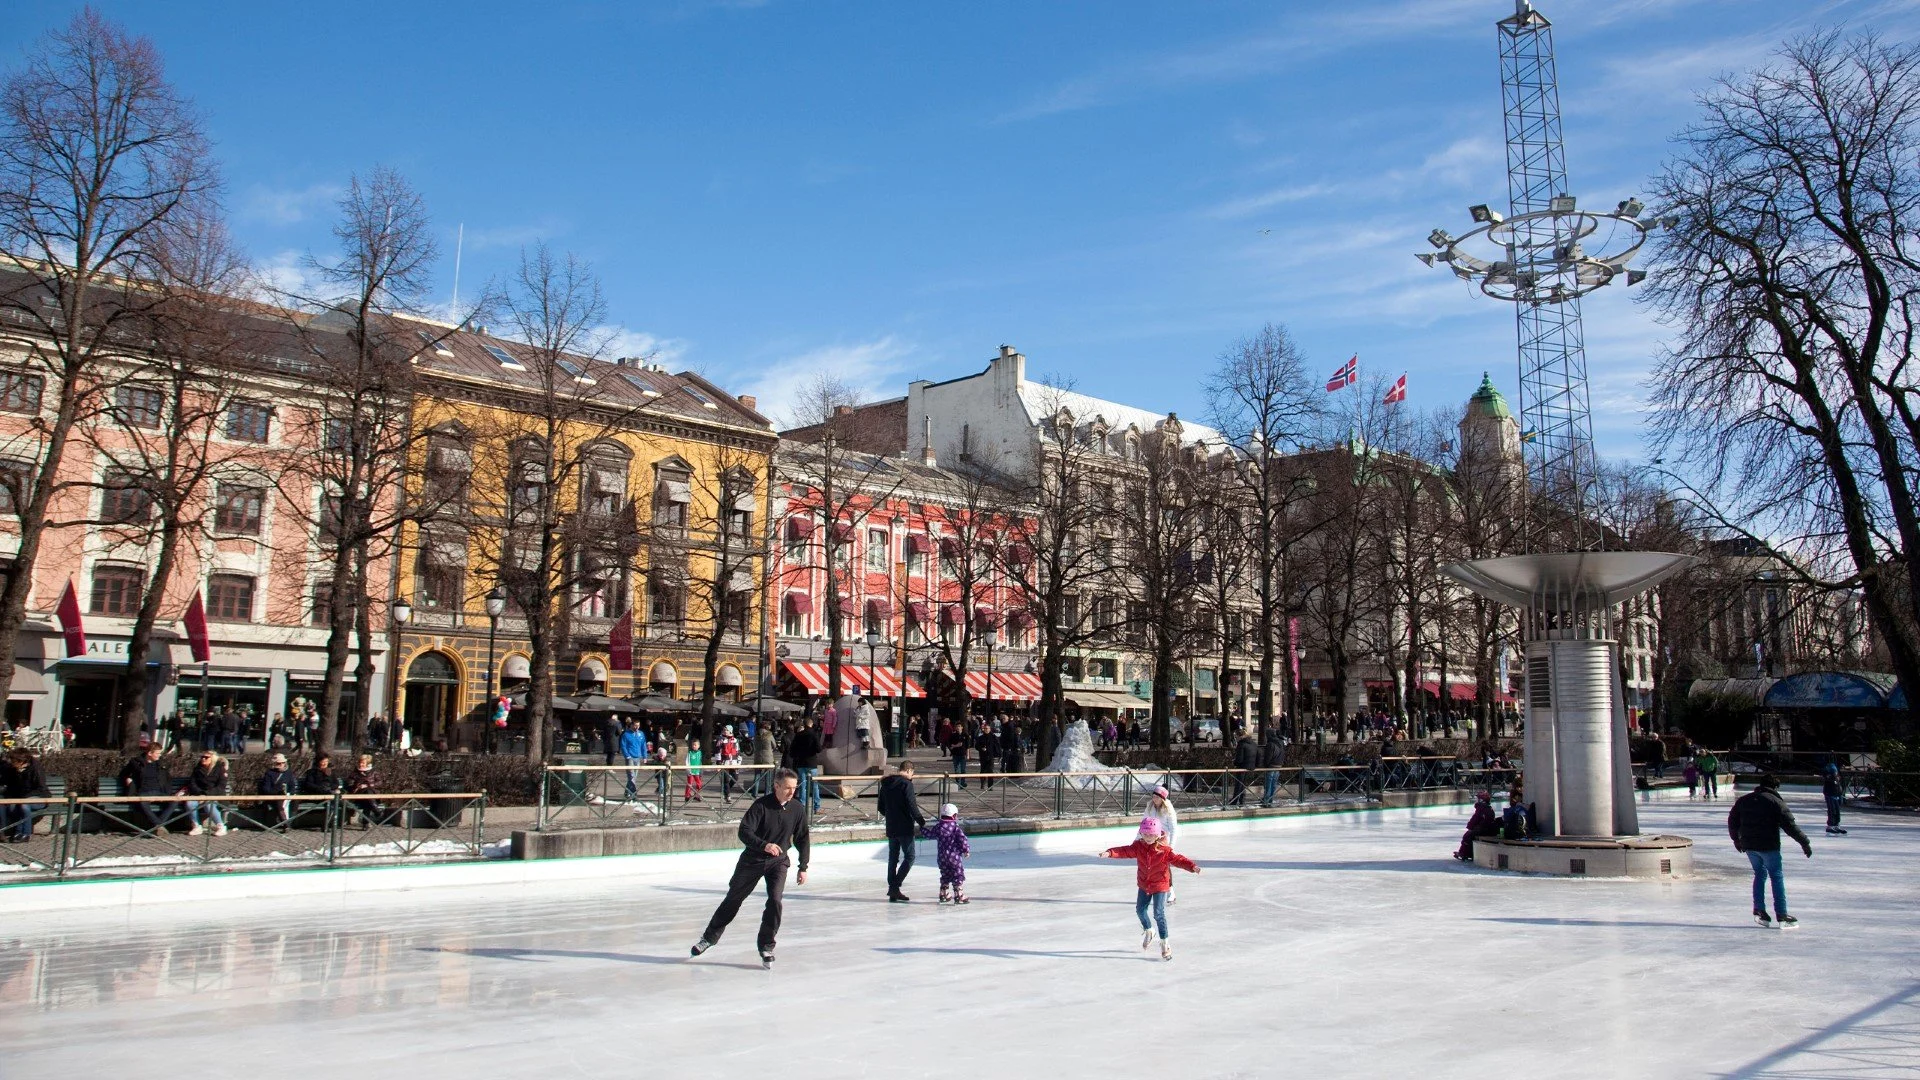 Skating Rink at Eidsvolls plass in Oslo